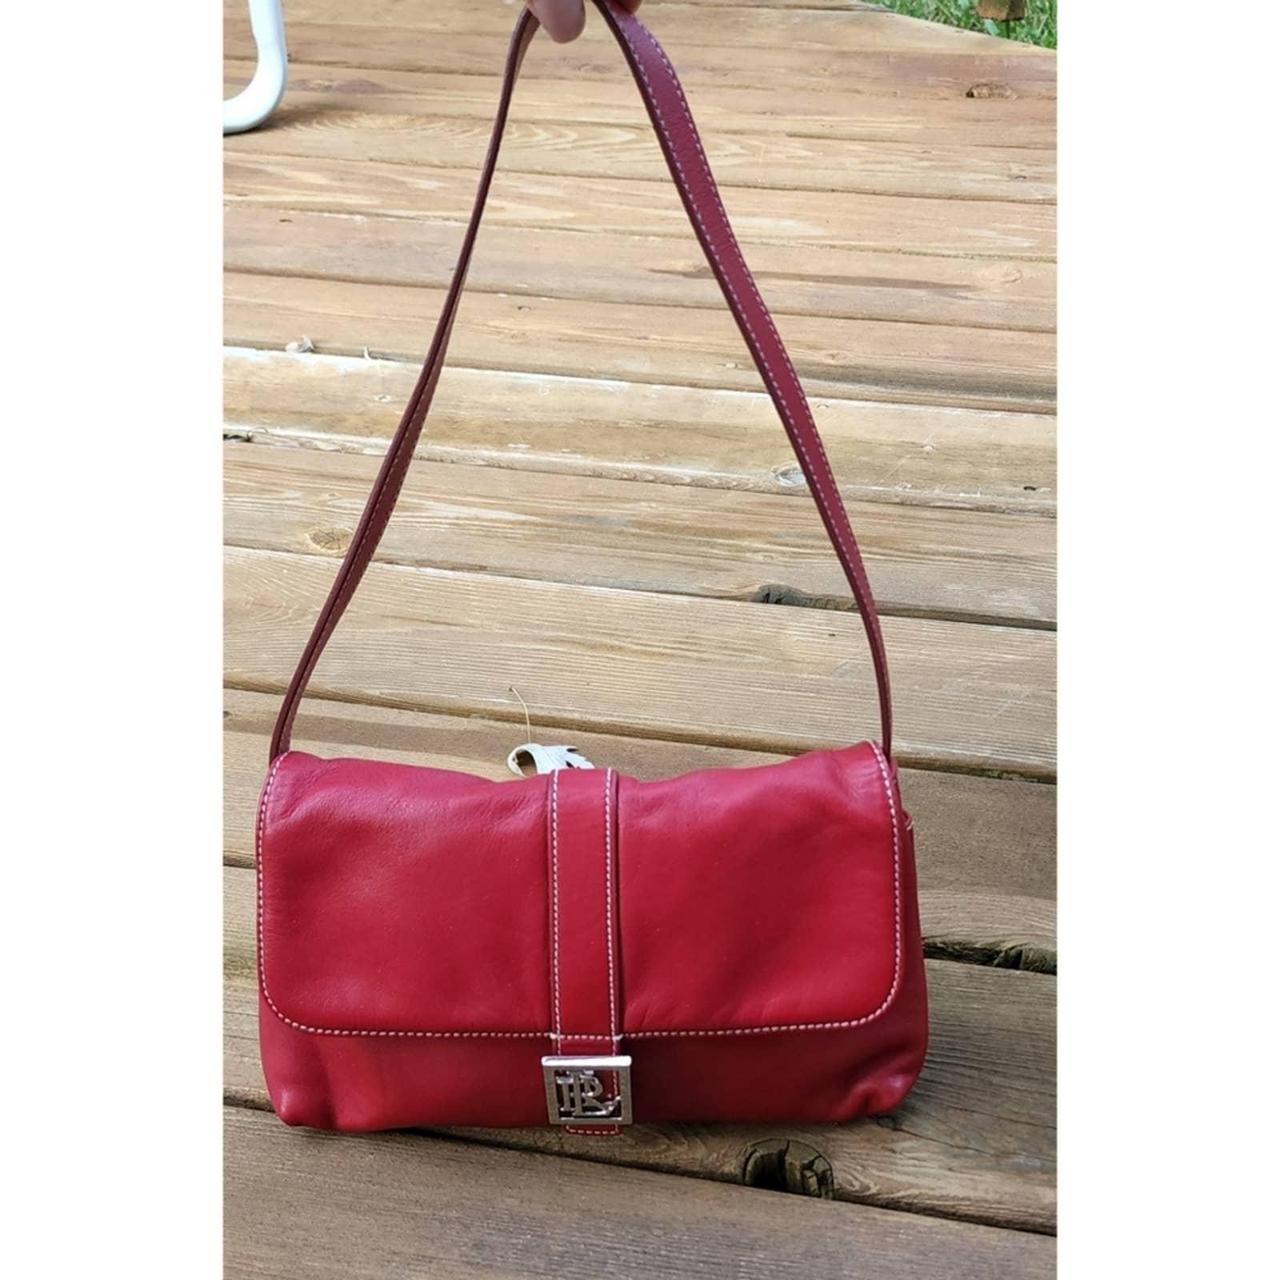 Ralph Lauren Women's Red and Silver Bag (2)